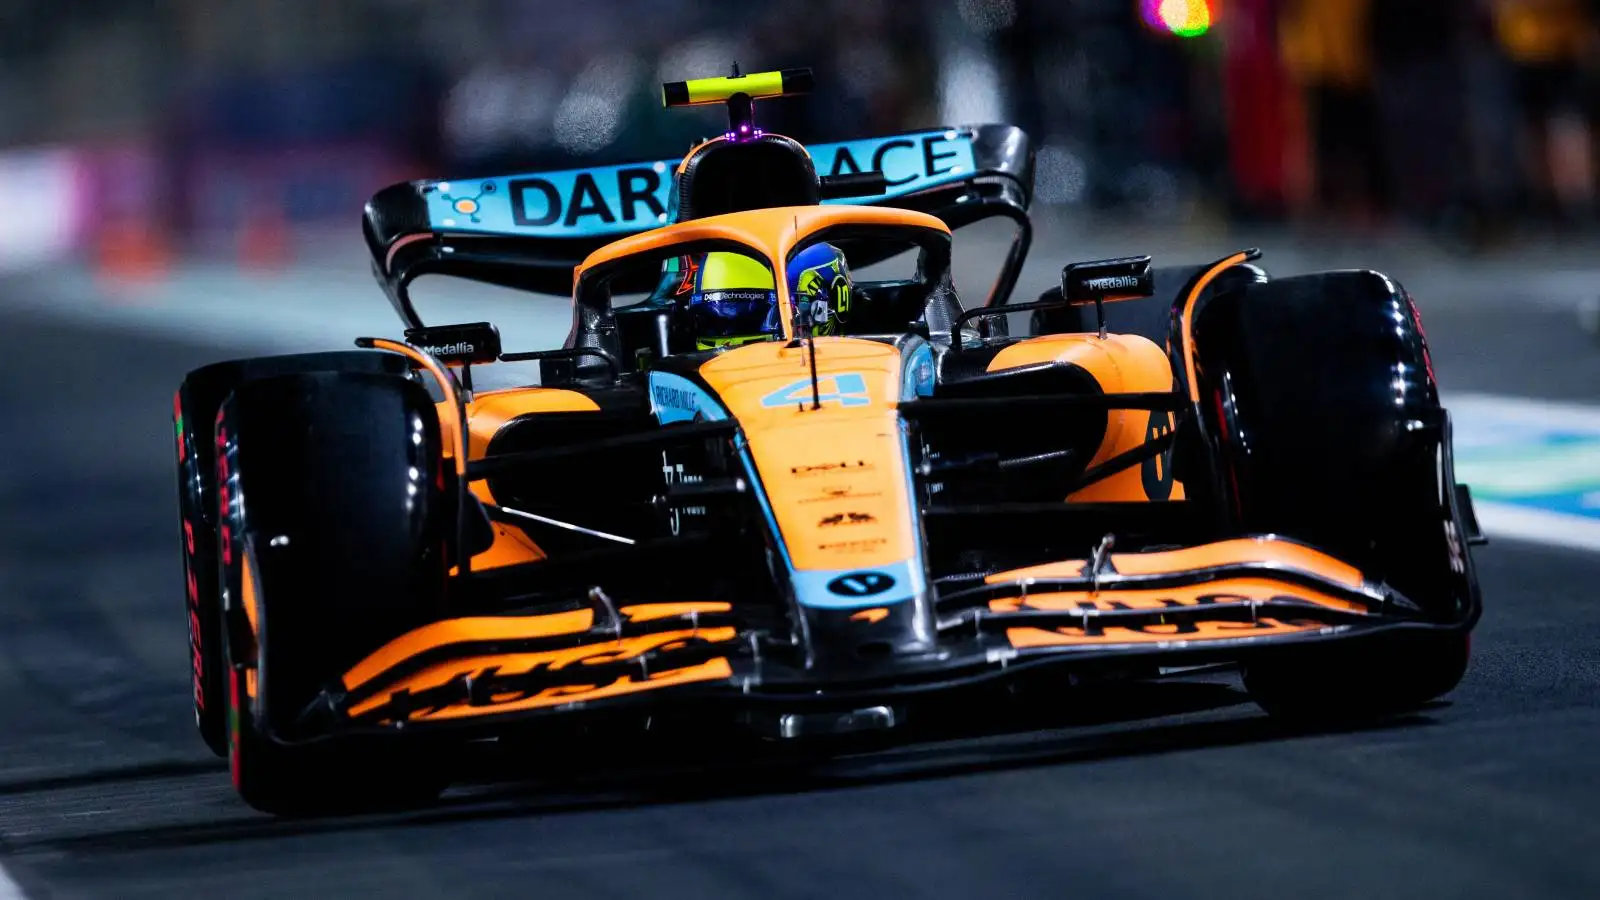 Lando Norris, McLaren, drives in the pit lane. Saudi Arabia, March 2022.